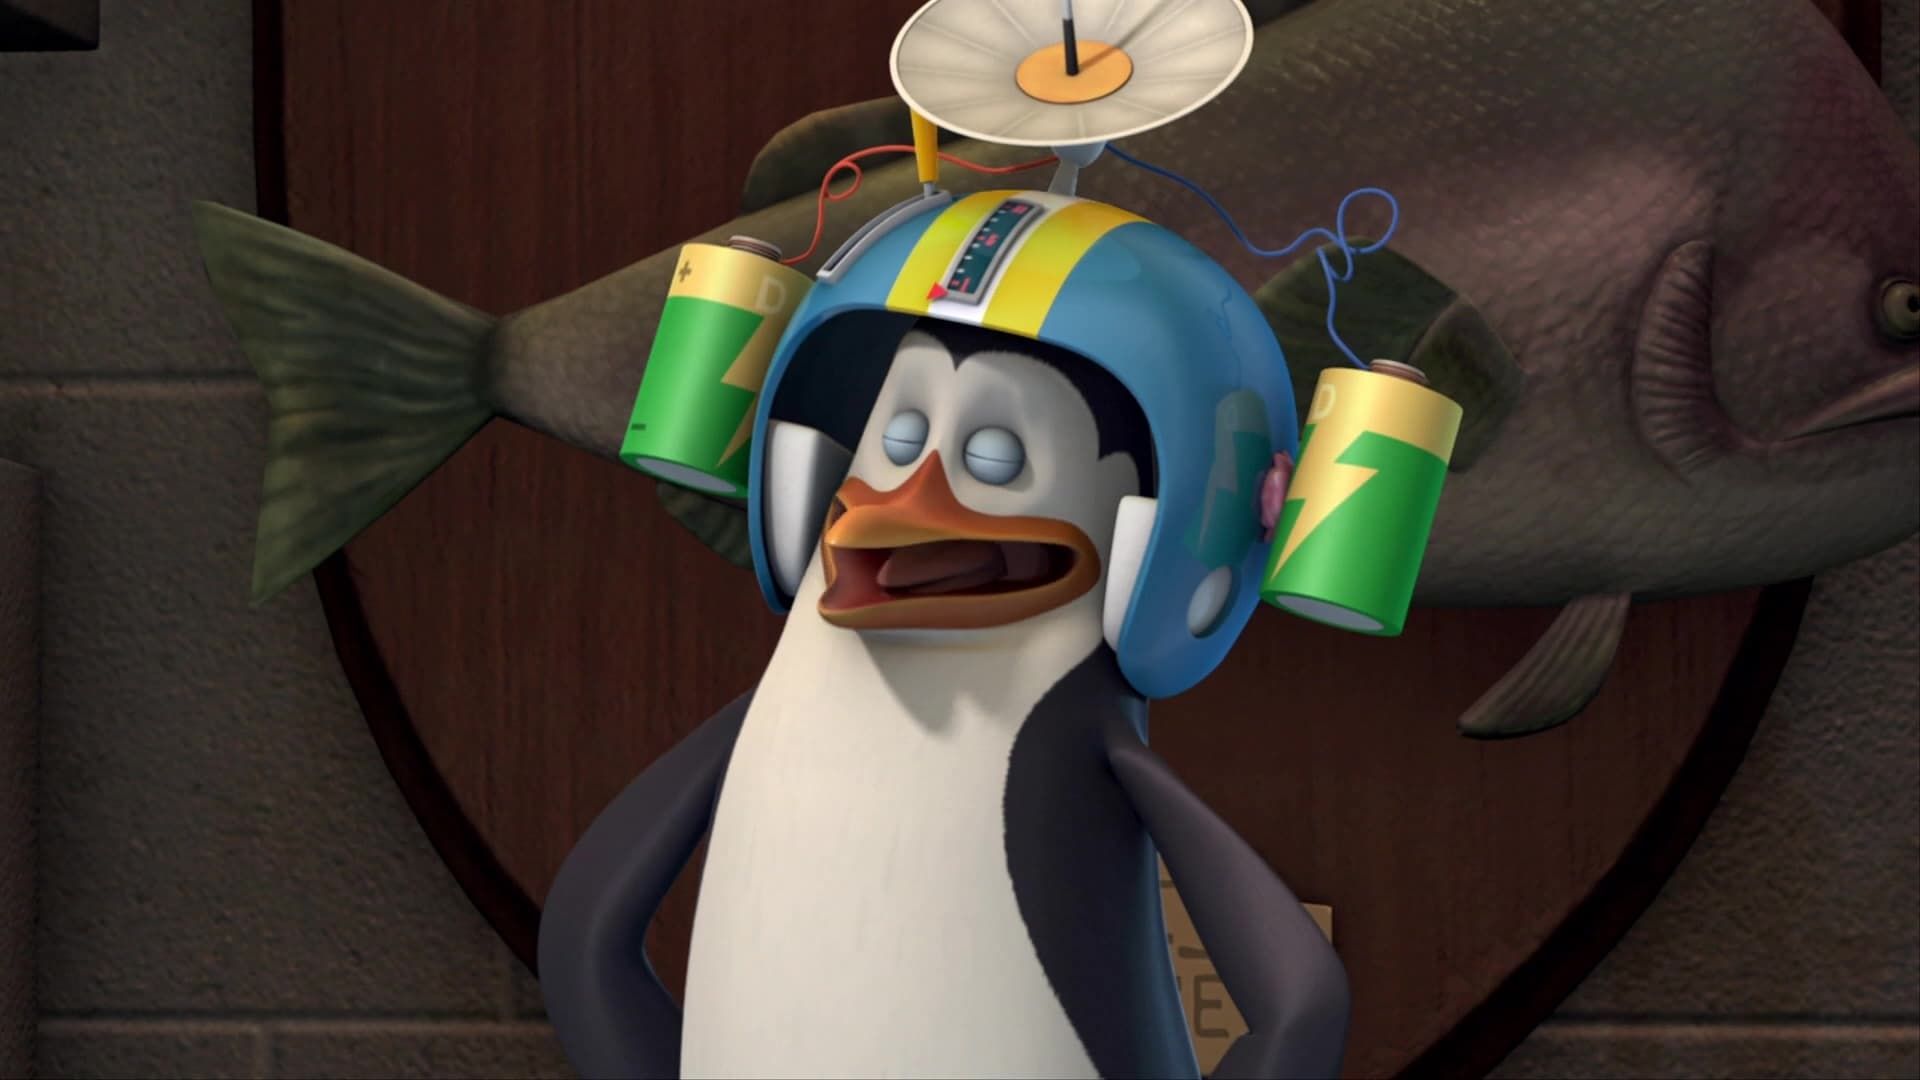 The Penguins of Madagascar background